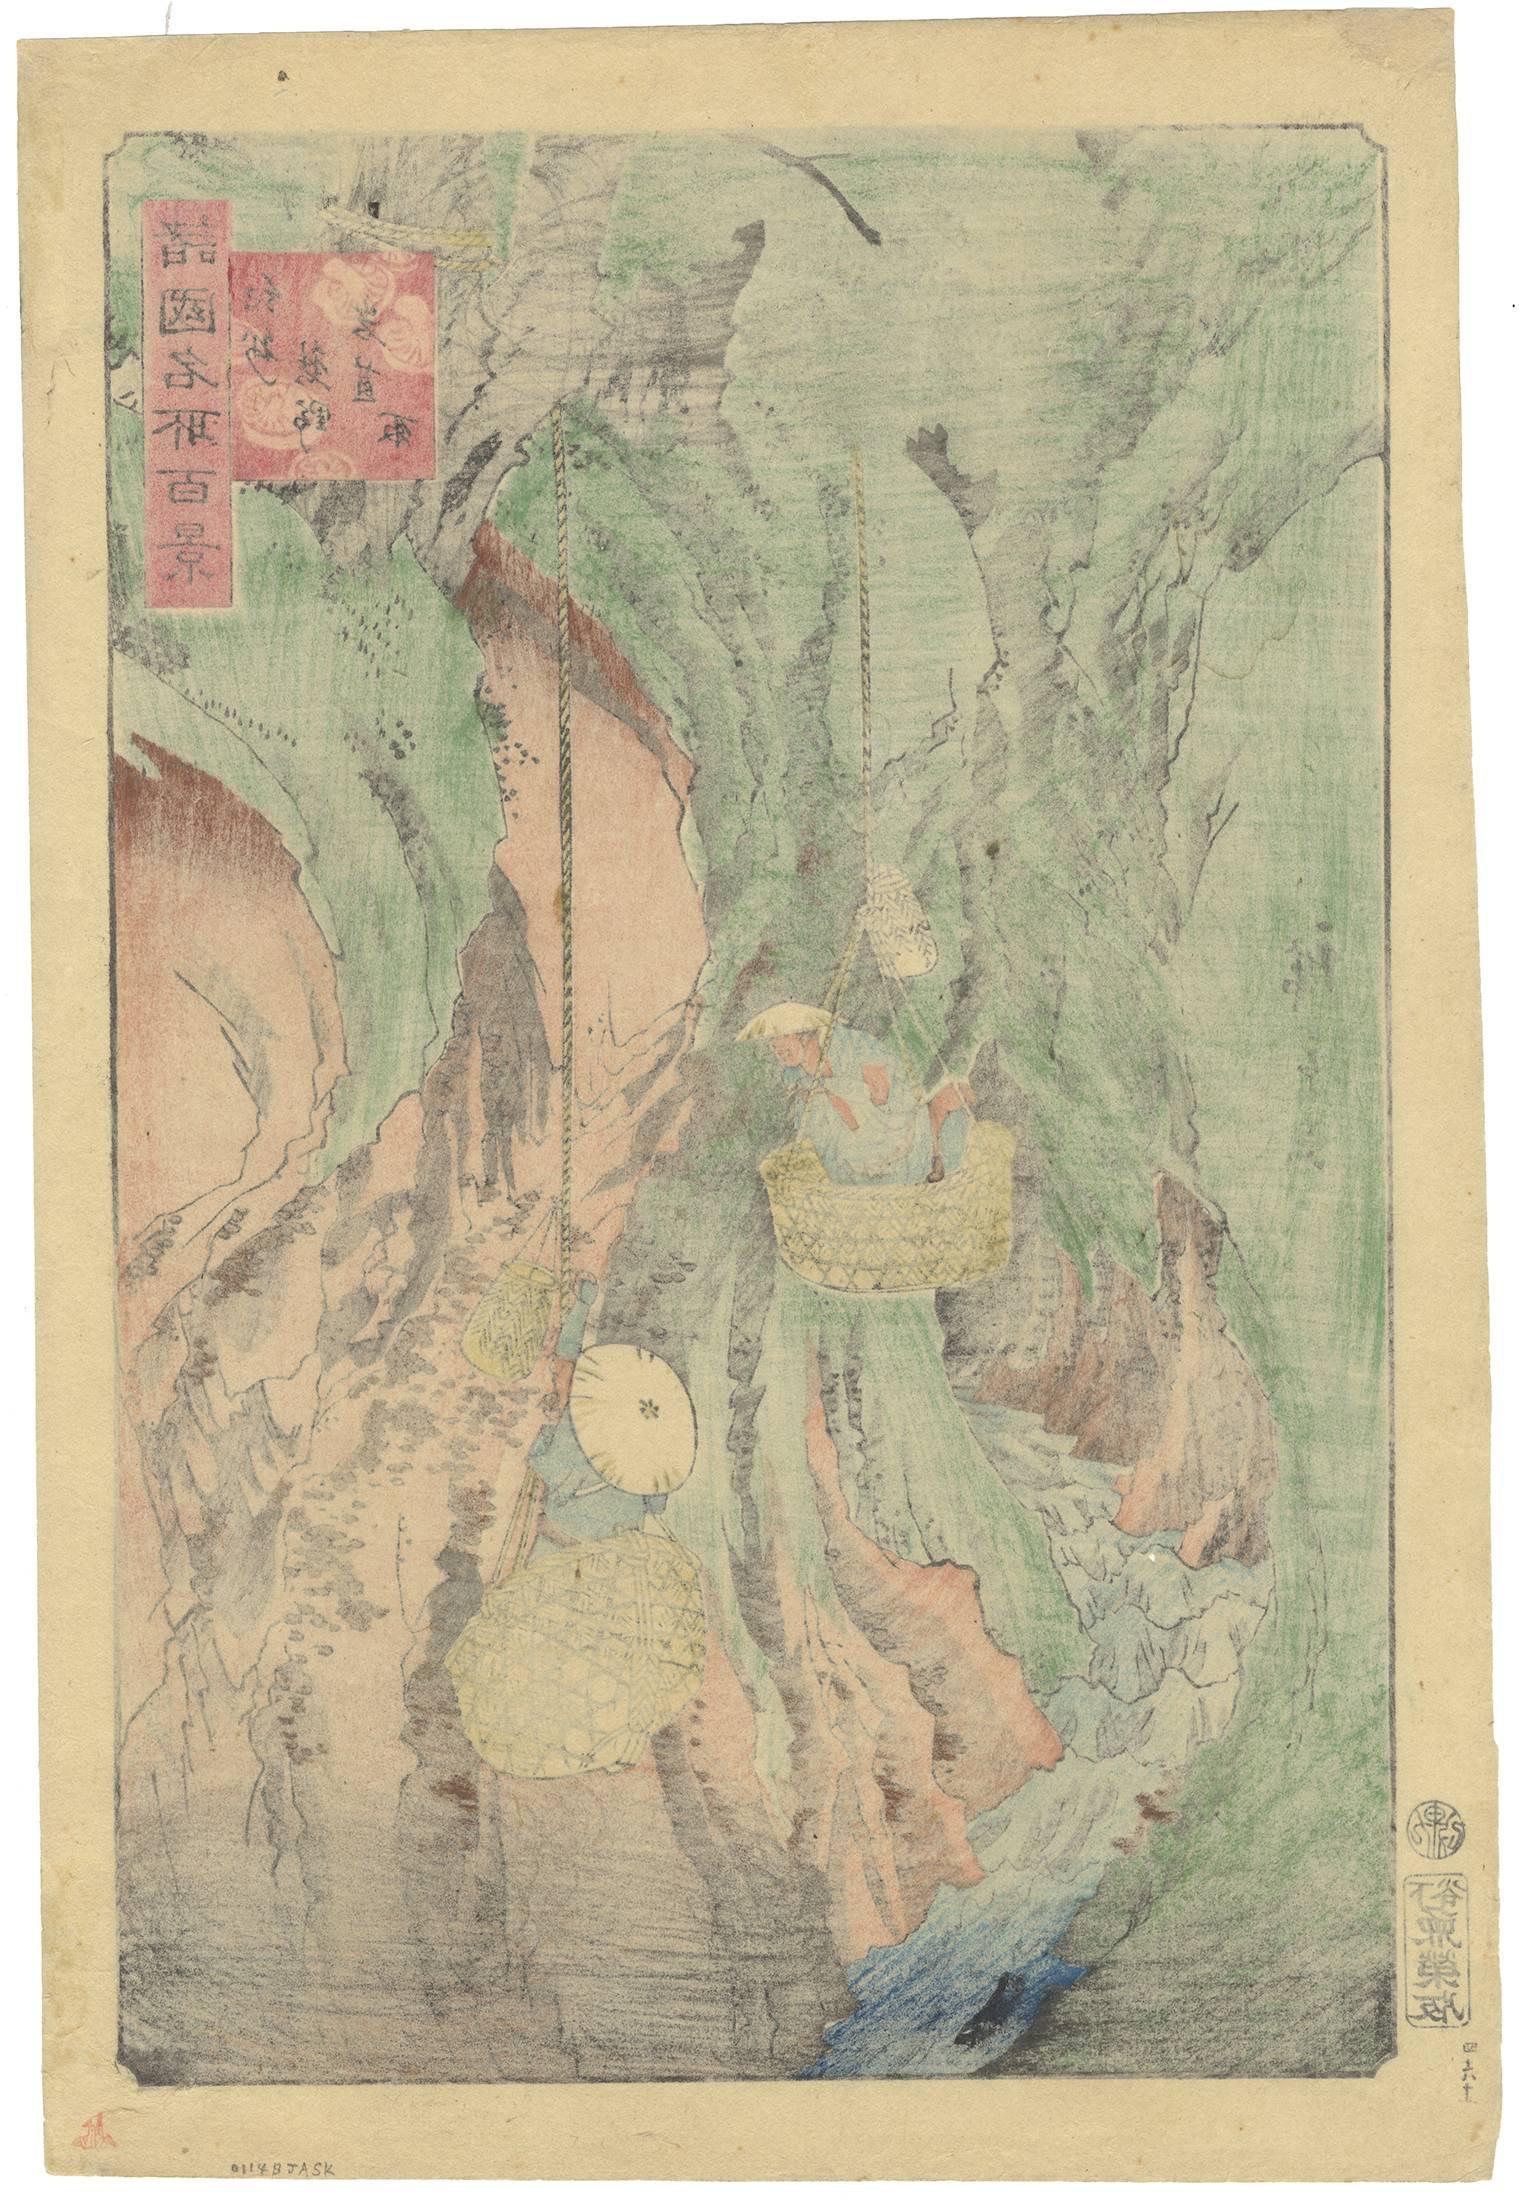 Hand-printed on Japanese washi paper (mulberry tree paper).
Artist: Hiroshige II Utagawa
Title: Gathering Cliff Fungus at Kumano in Kii Province, no. 45 Kumano 
Series: 100 Famous Views of Provinces
Publisher: Uoya Eikichi
Published: 1860.

Quite